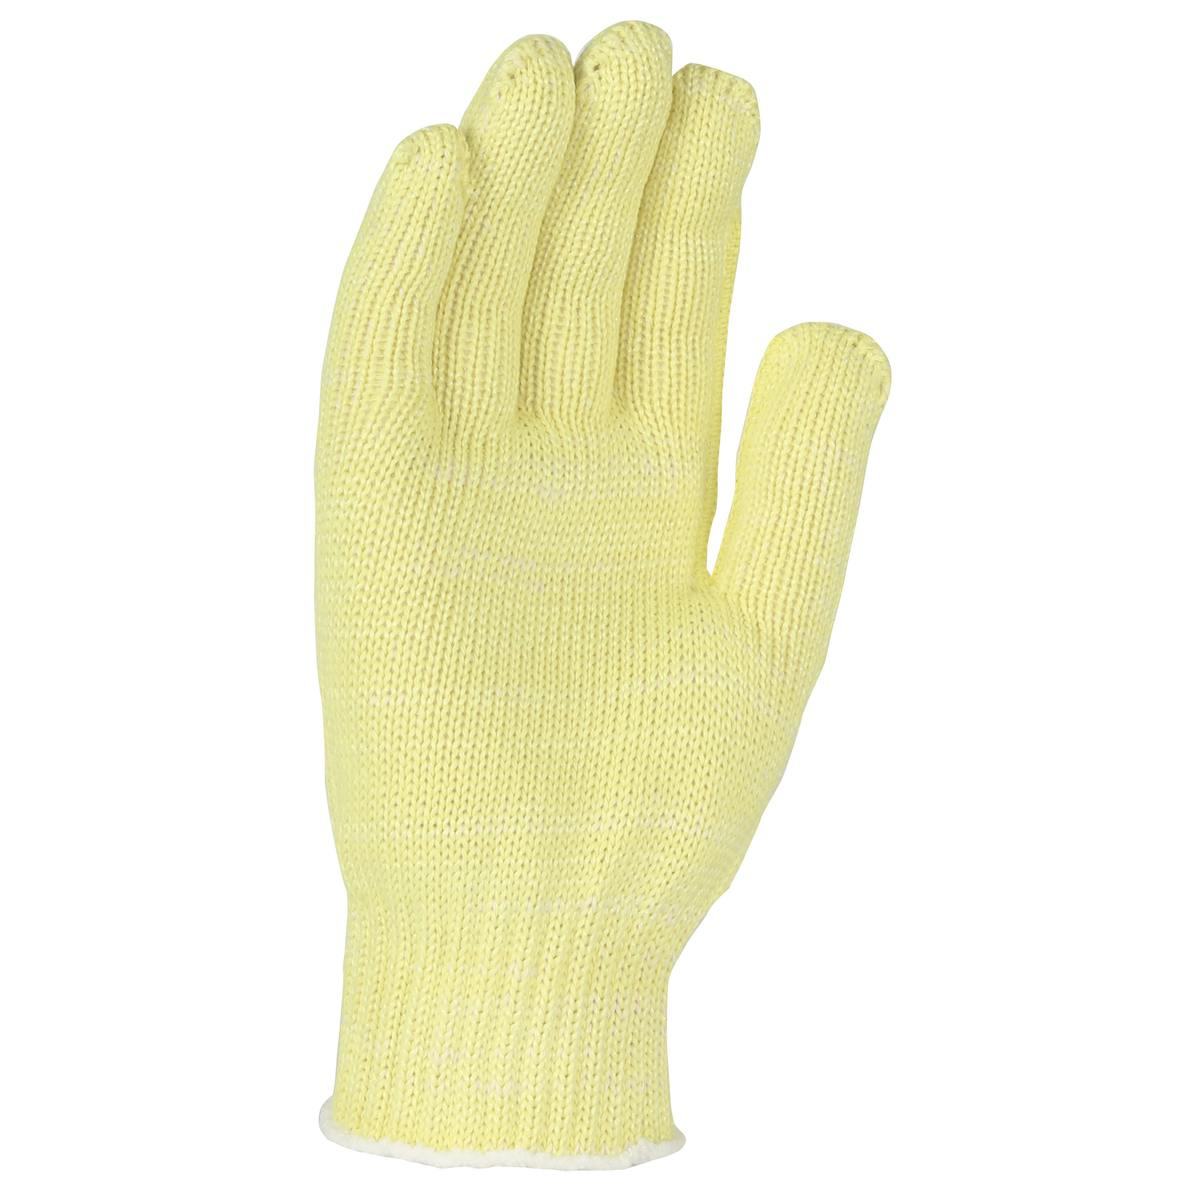 Kut Gard® Seamless Knit ATA® / Aramid Blended Glove - Heavy Weight (MATATW40PL-OERT)